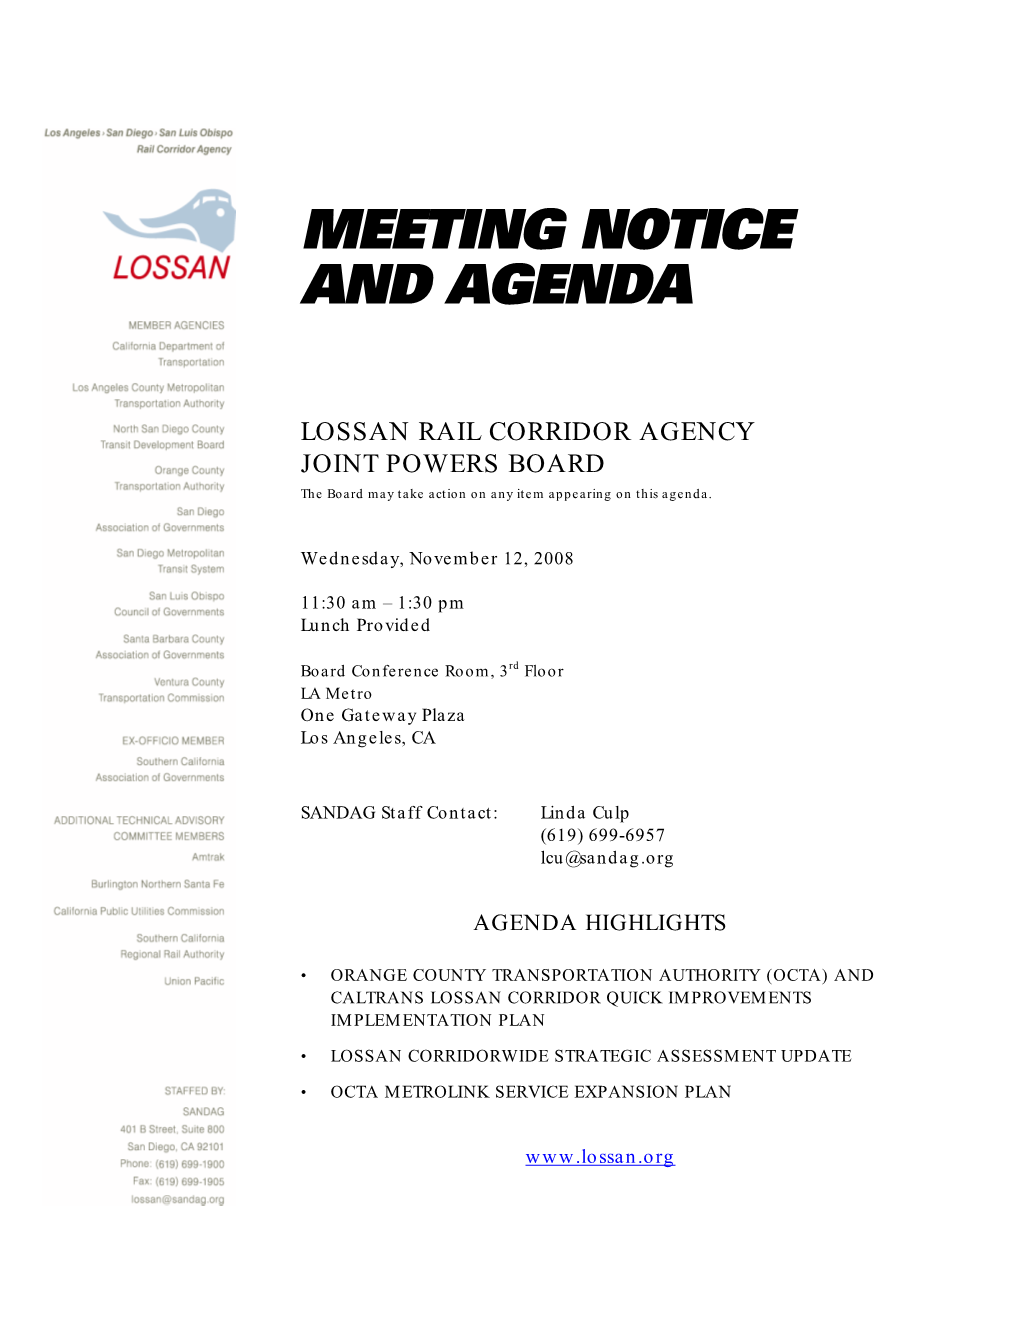 Meeting Notice and Agenda